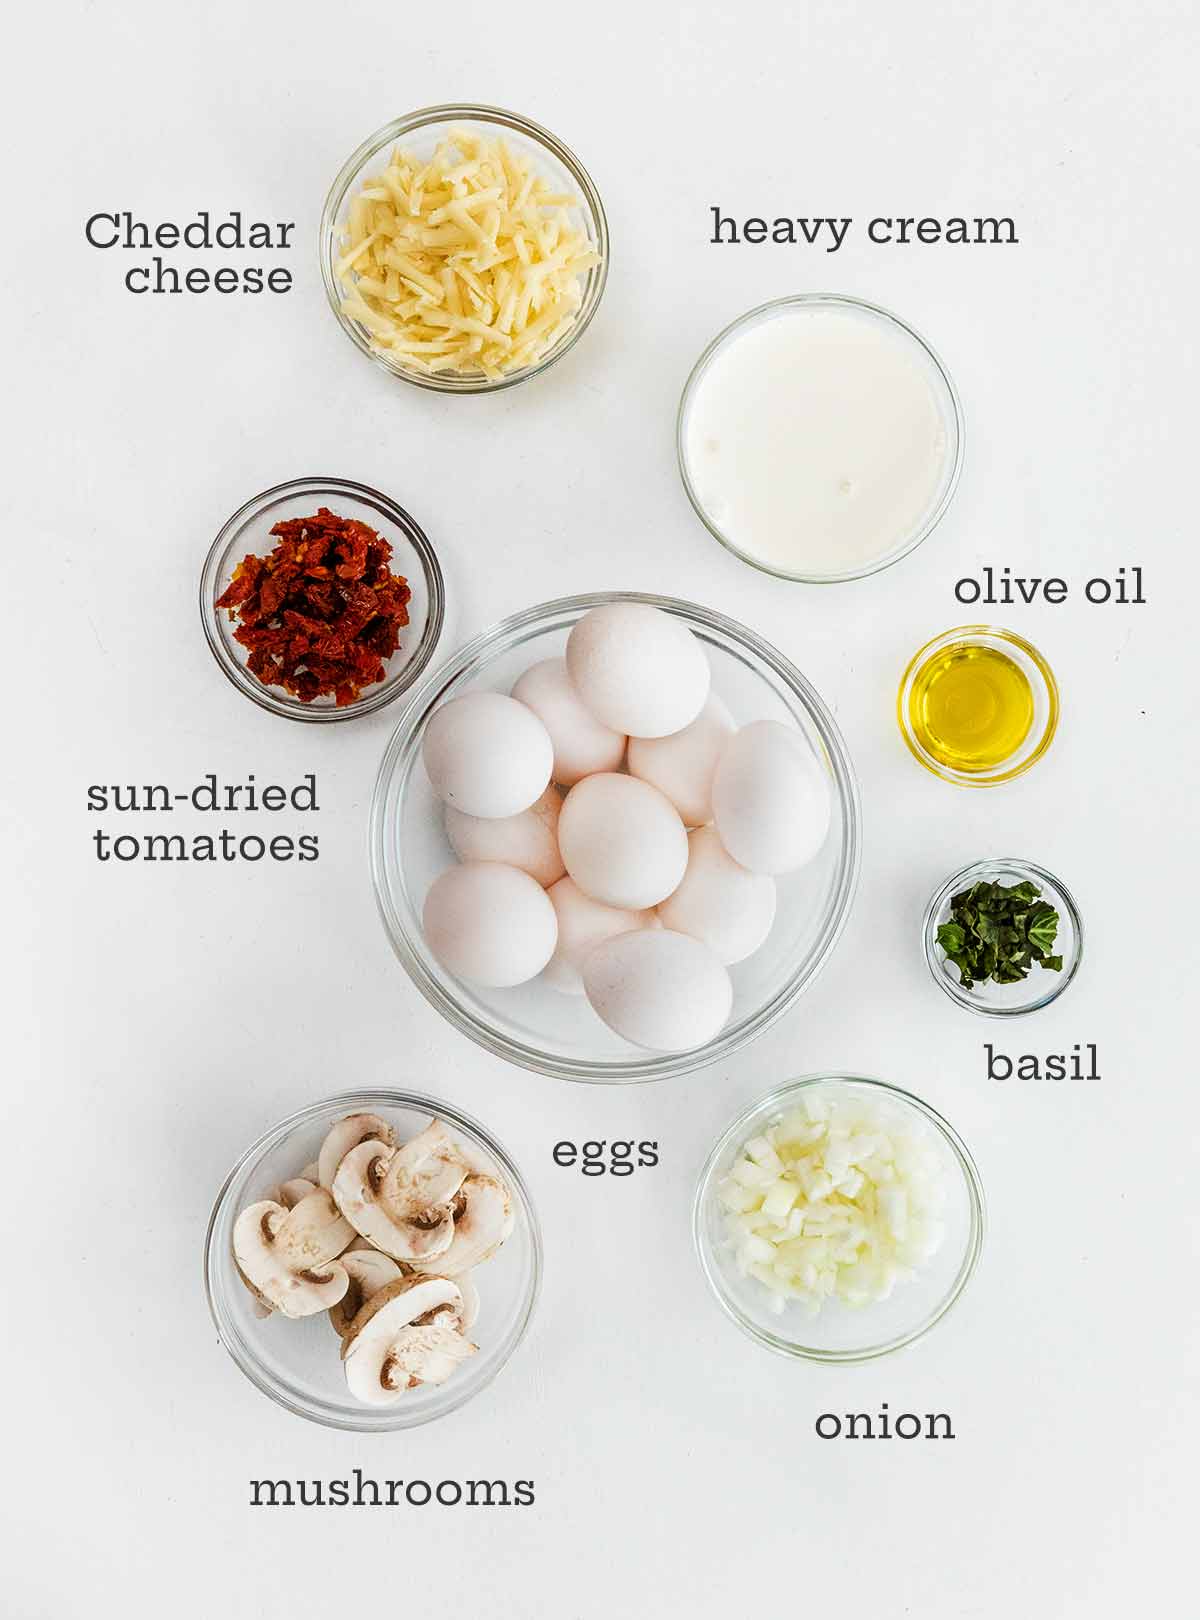 Eggs, cheese, sun-dried tomatoes, oil, basil, onion, and mushrooms.